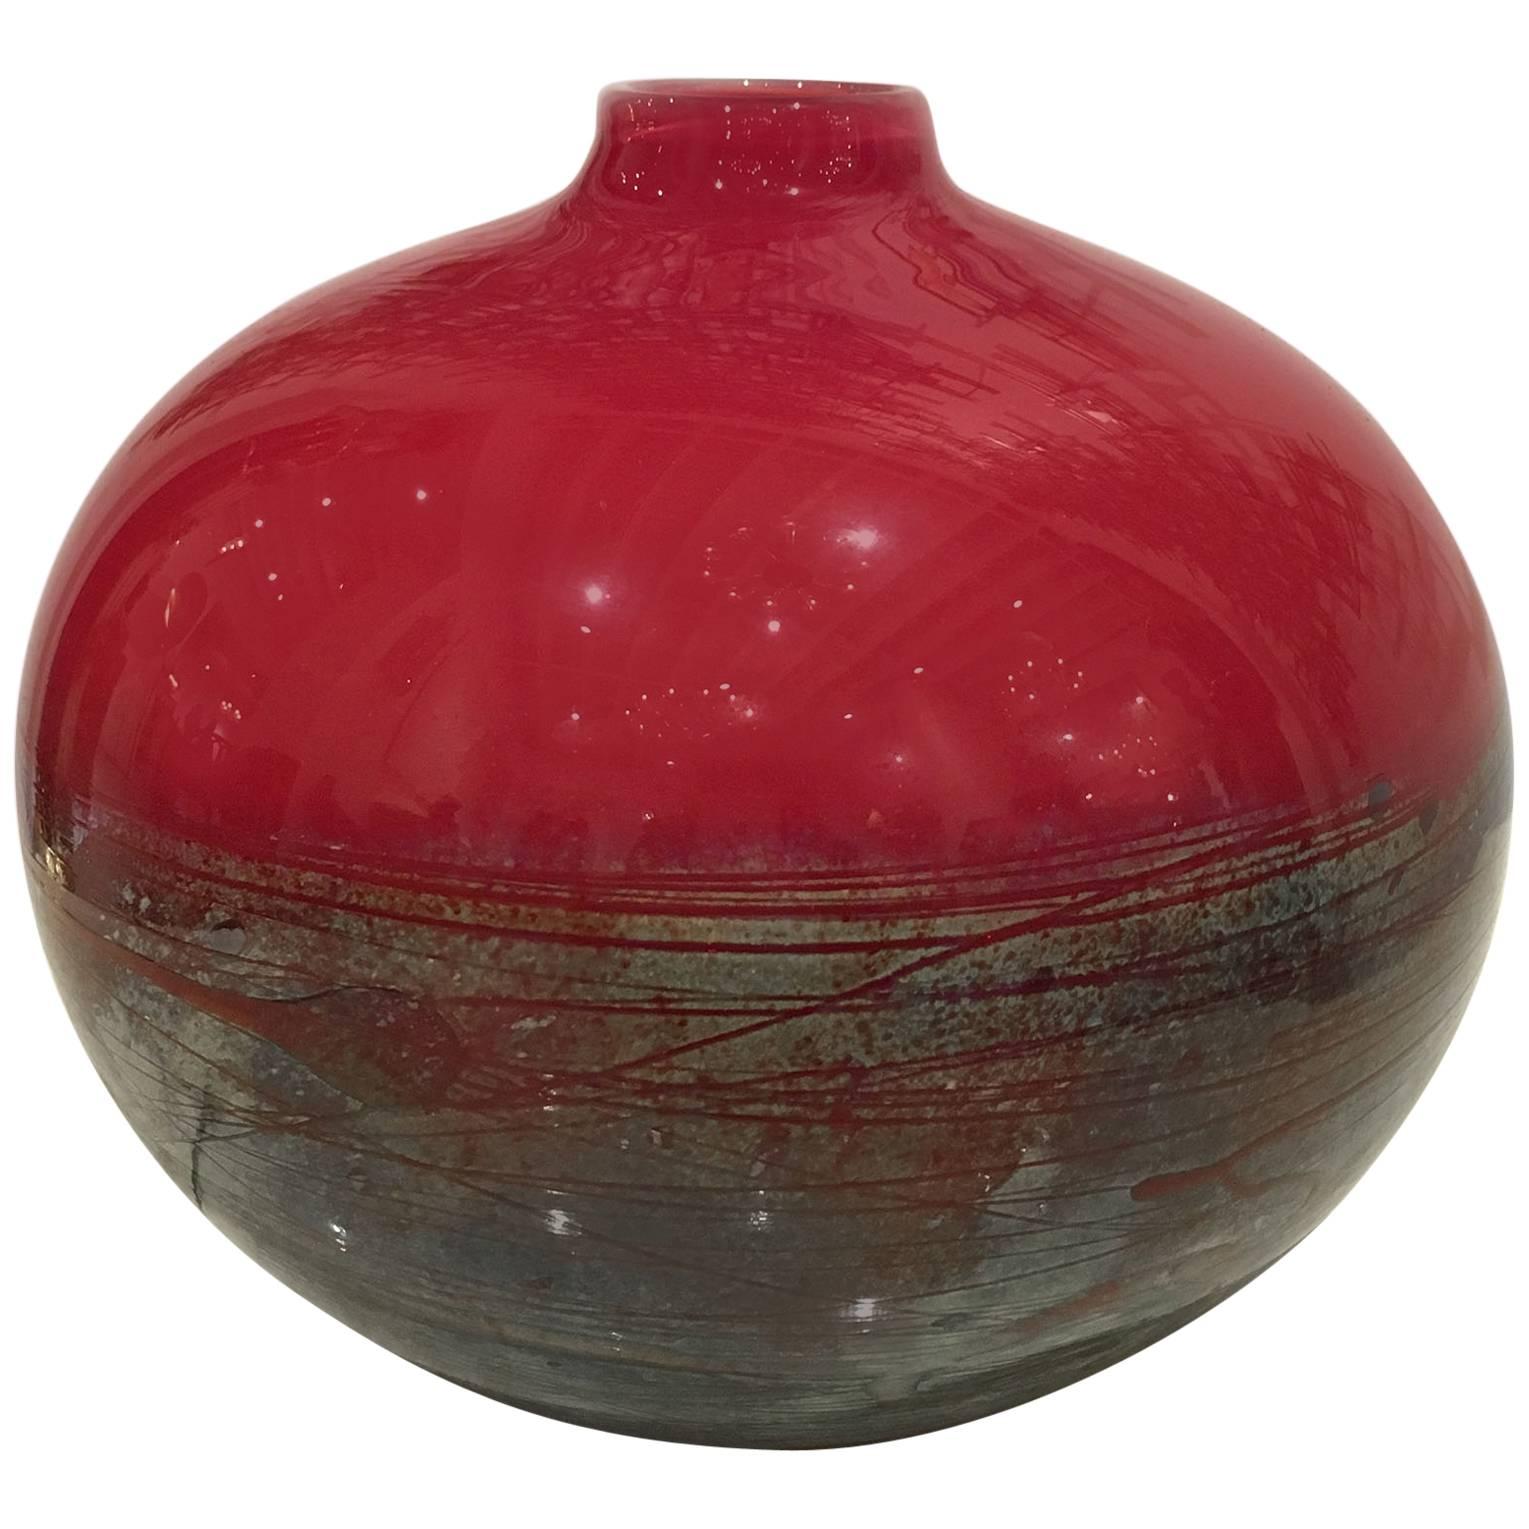 Handblown Red Celadon Glass Vase by Chris Ross